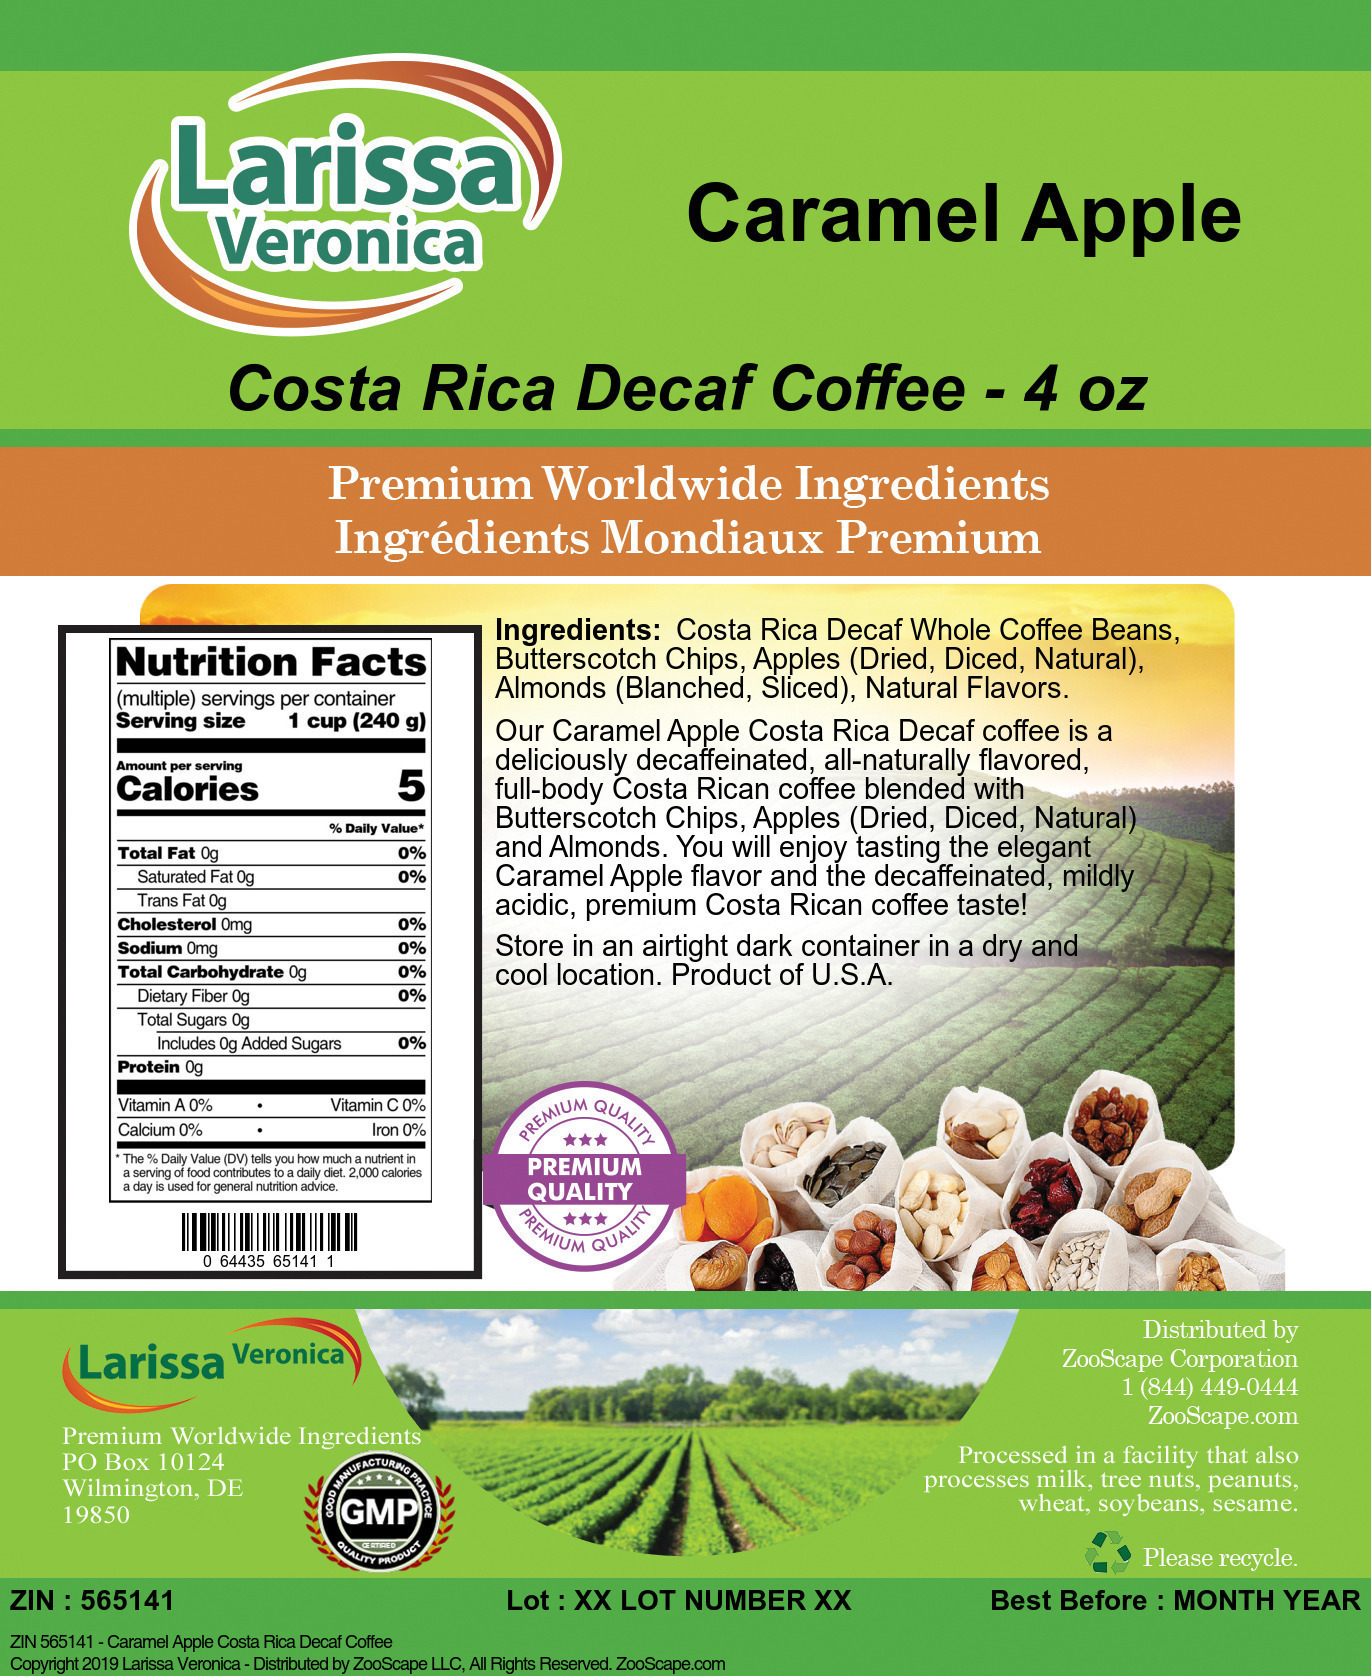 Caramel Apple Costa Rica Decaf Coffee - Label